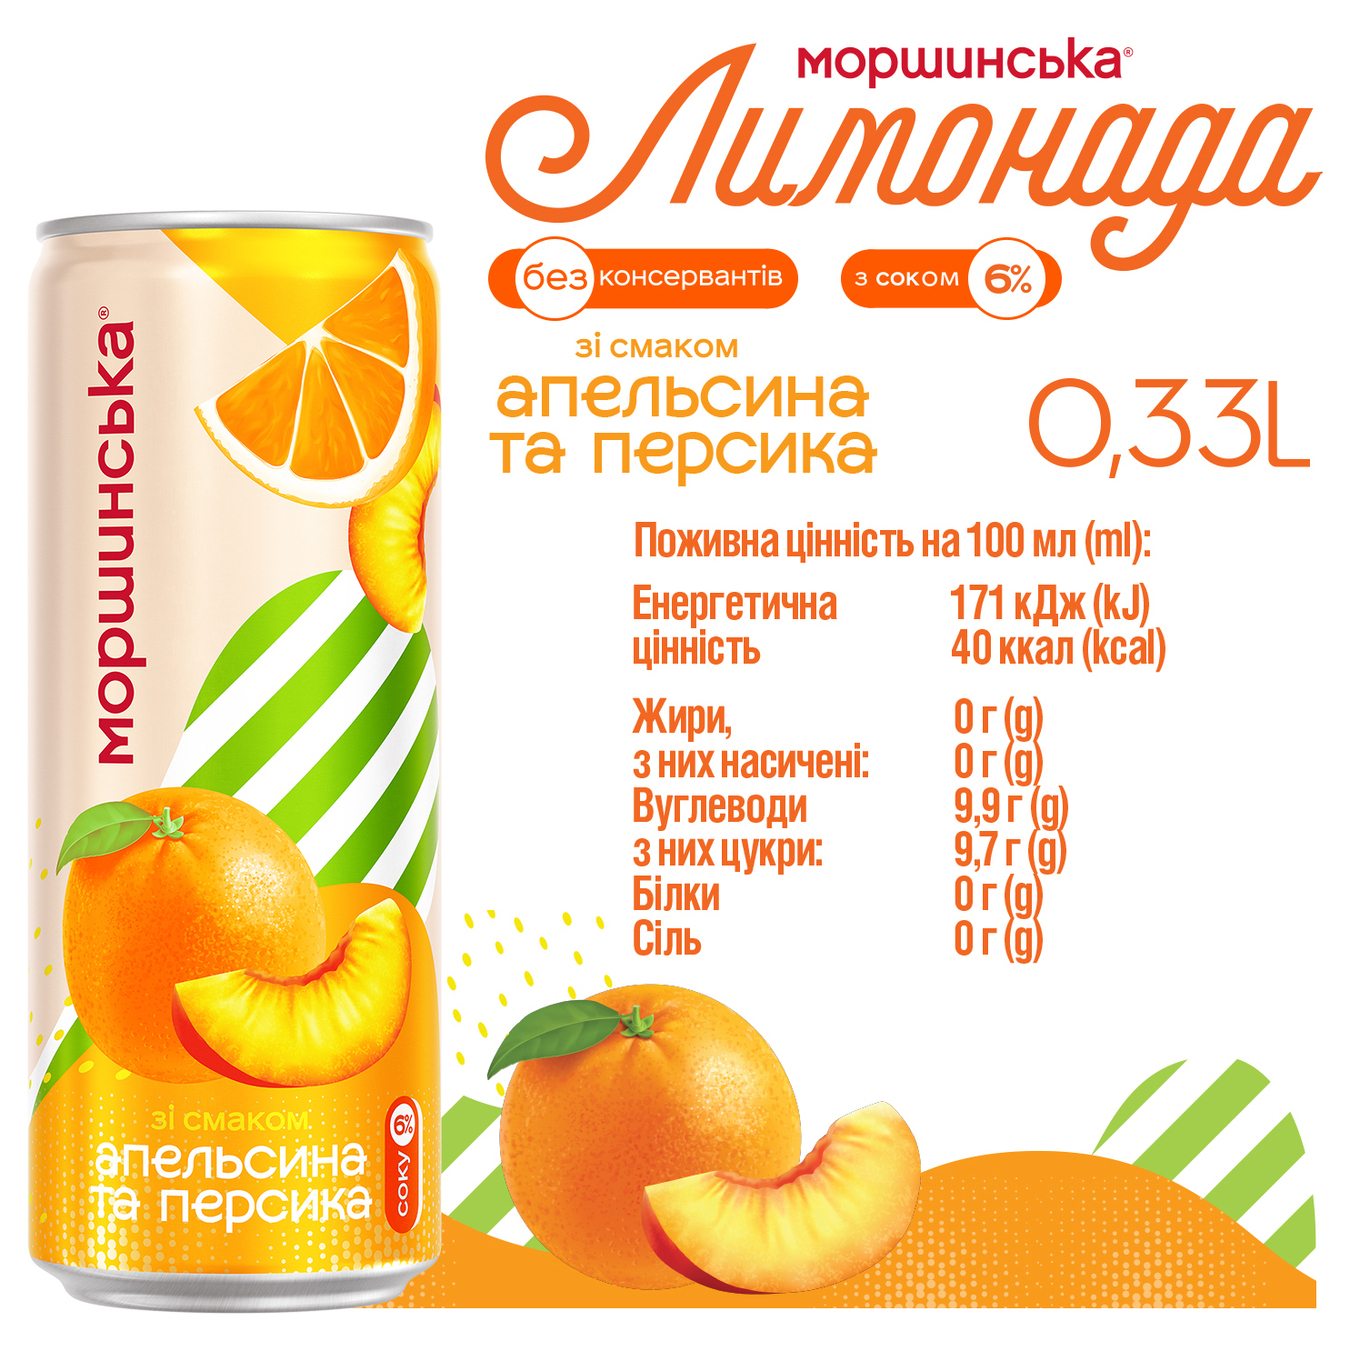 Carbonated drink Morshynska orange-peach lemonade 0.33 l iron can 4